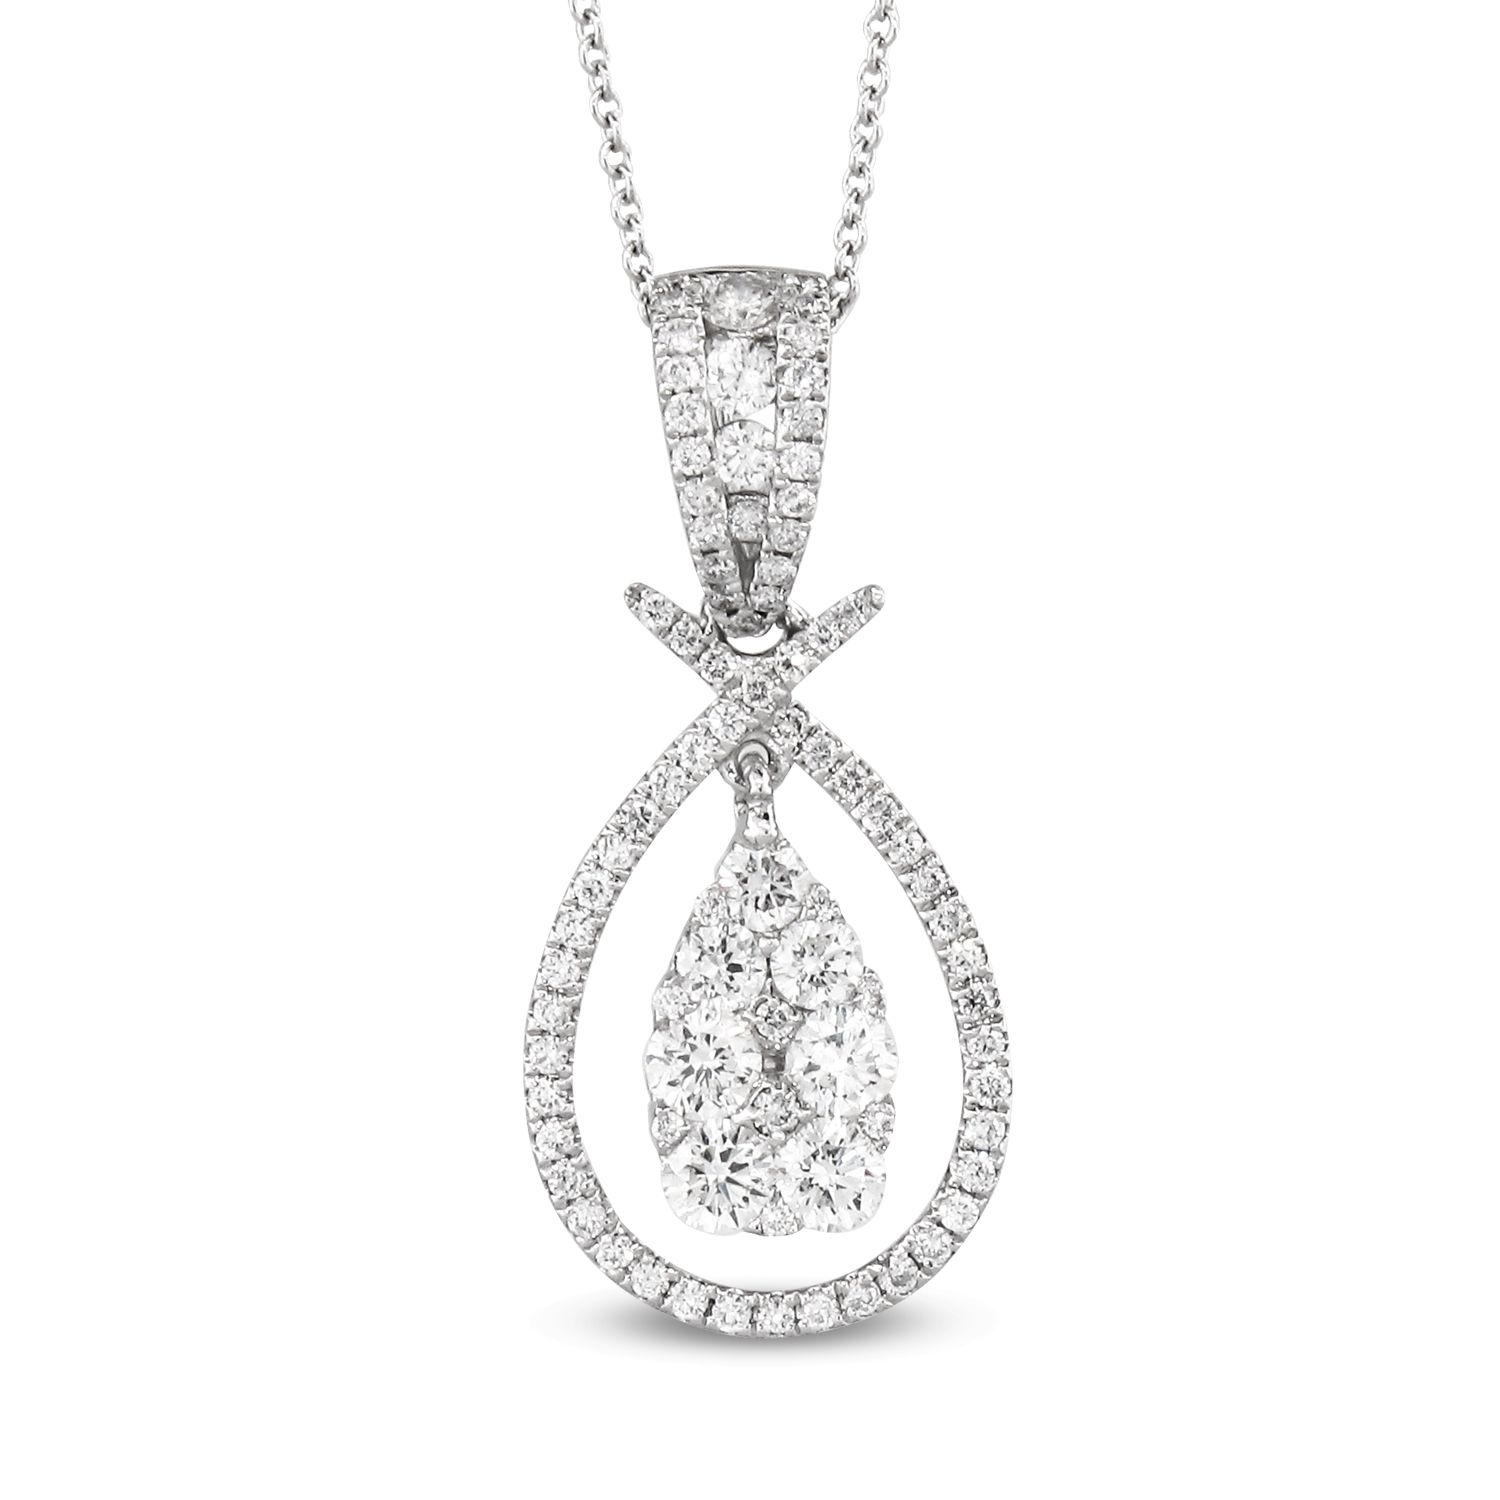 View 1.16ctw Diamond Pear Shaped Fashion Pendant in 18k WG